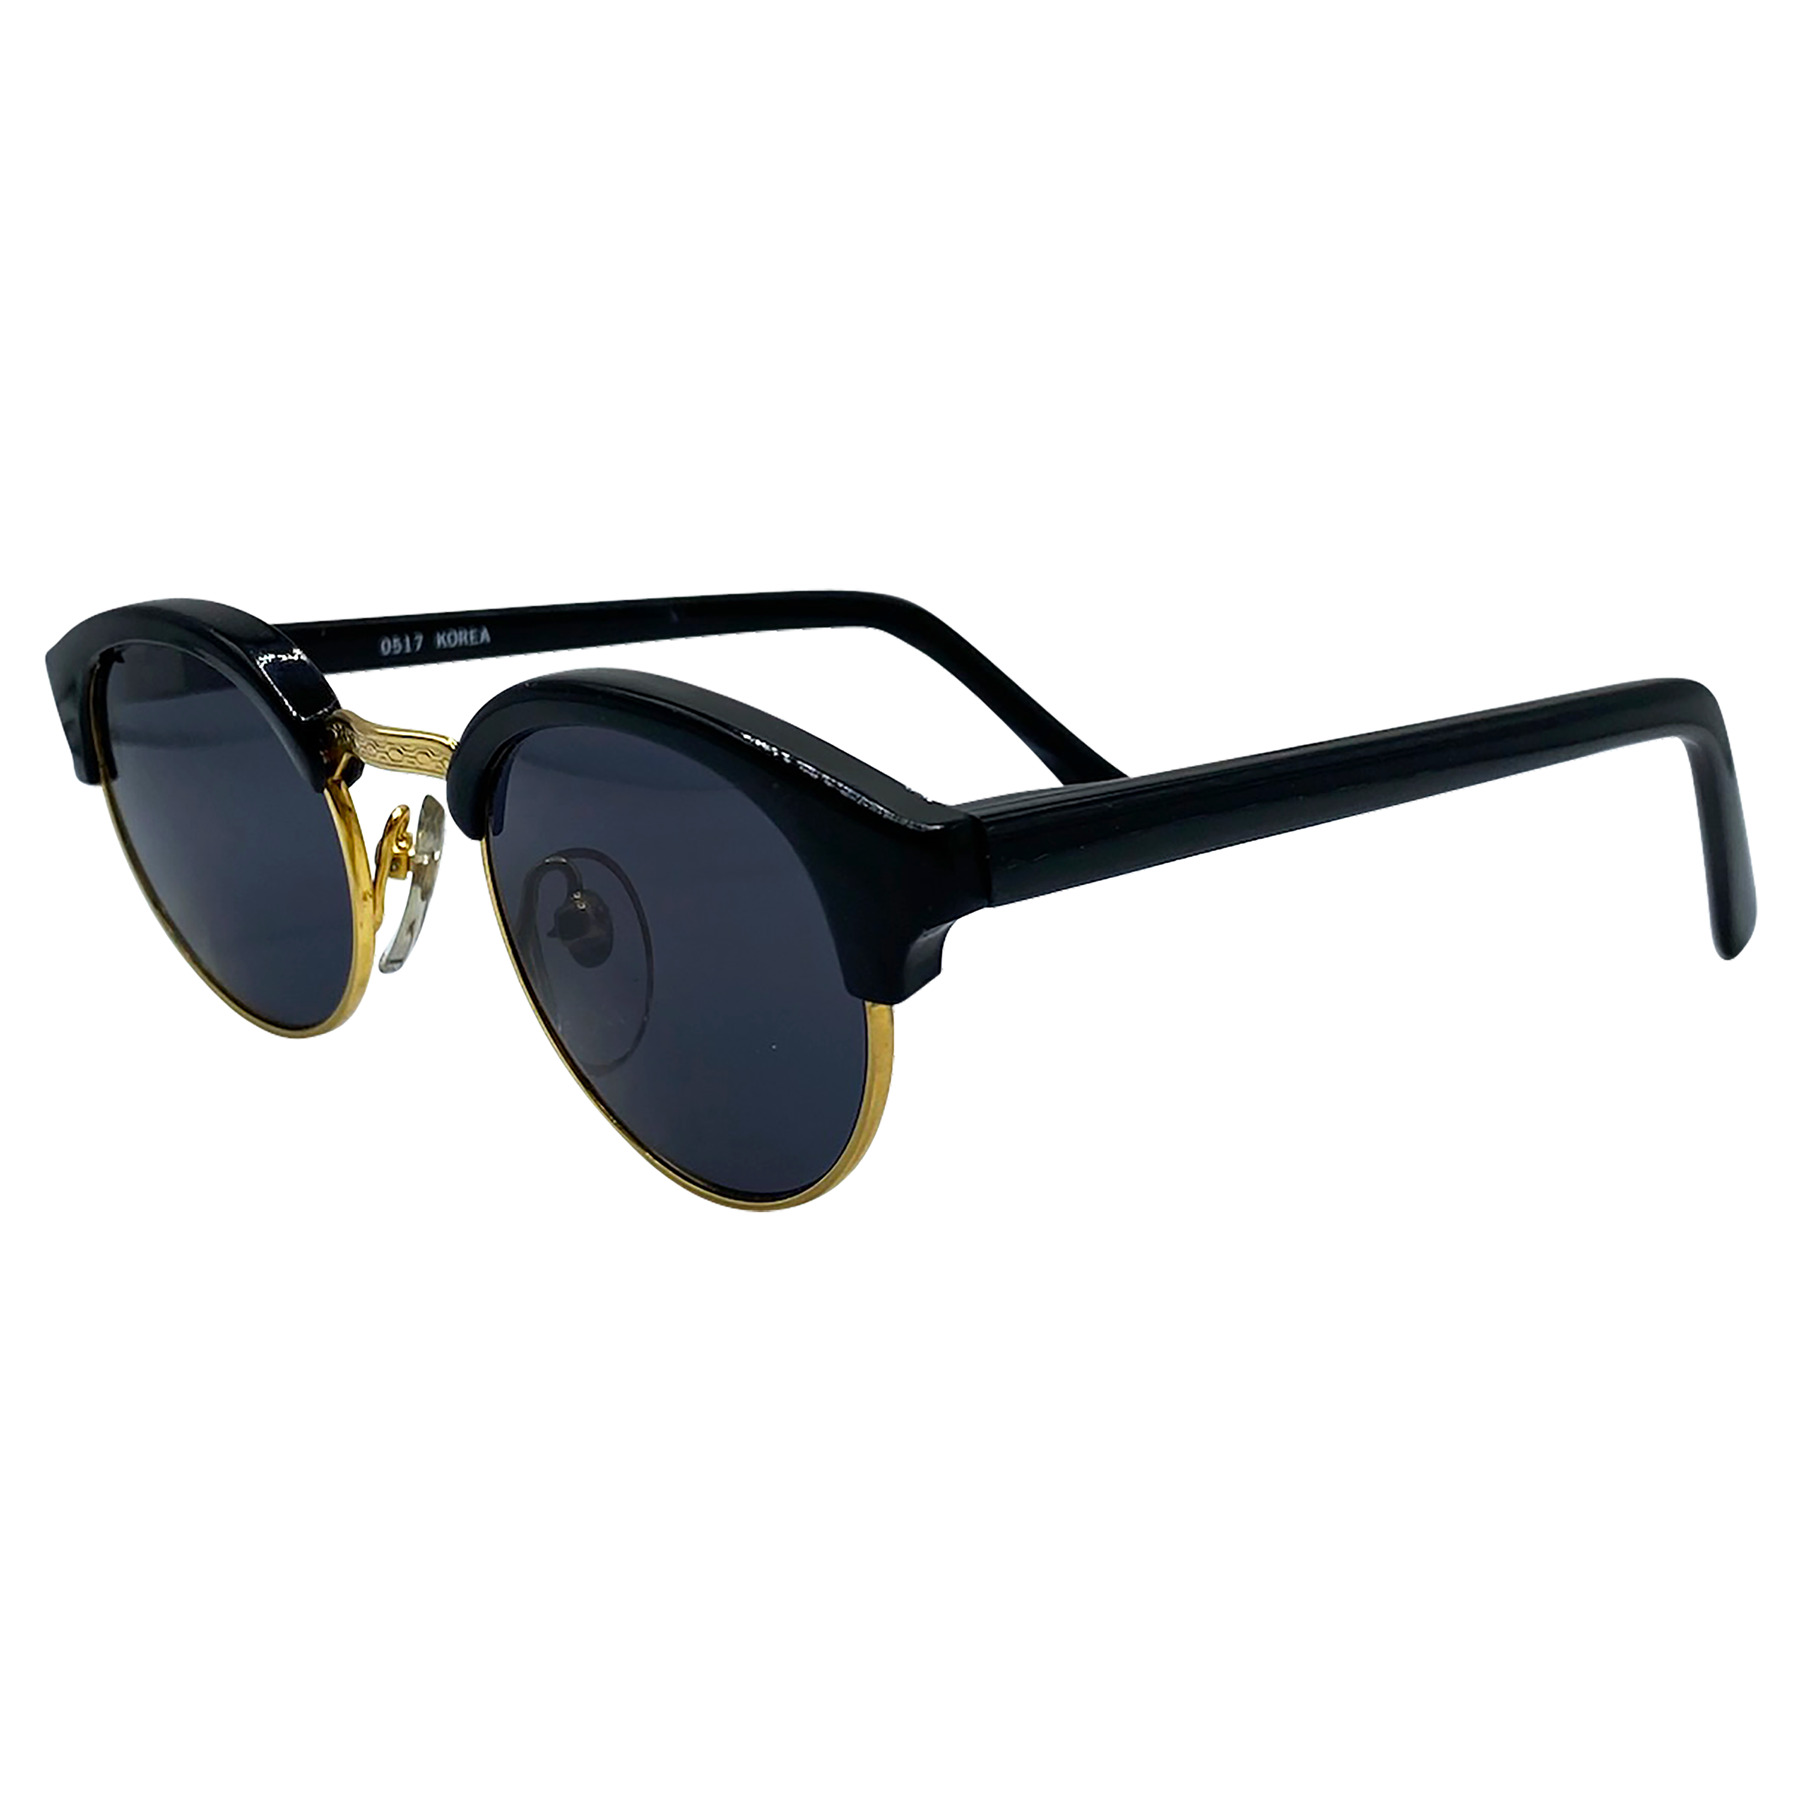 FRESHMEN Tiny Classic 60s Sunglasses